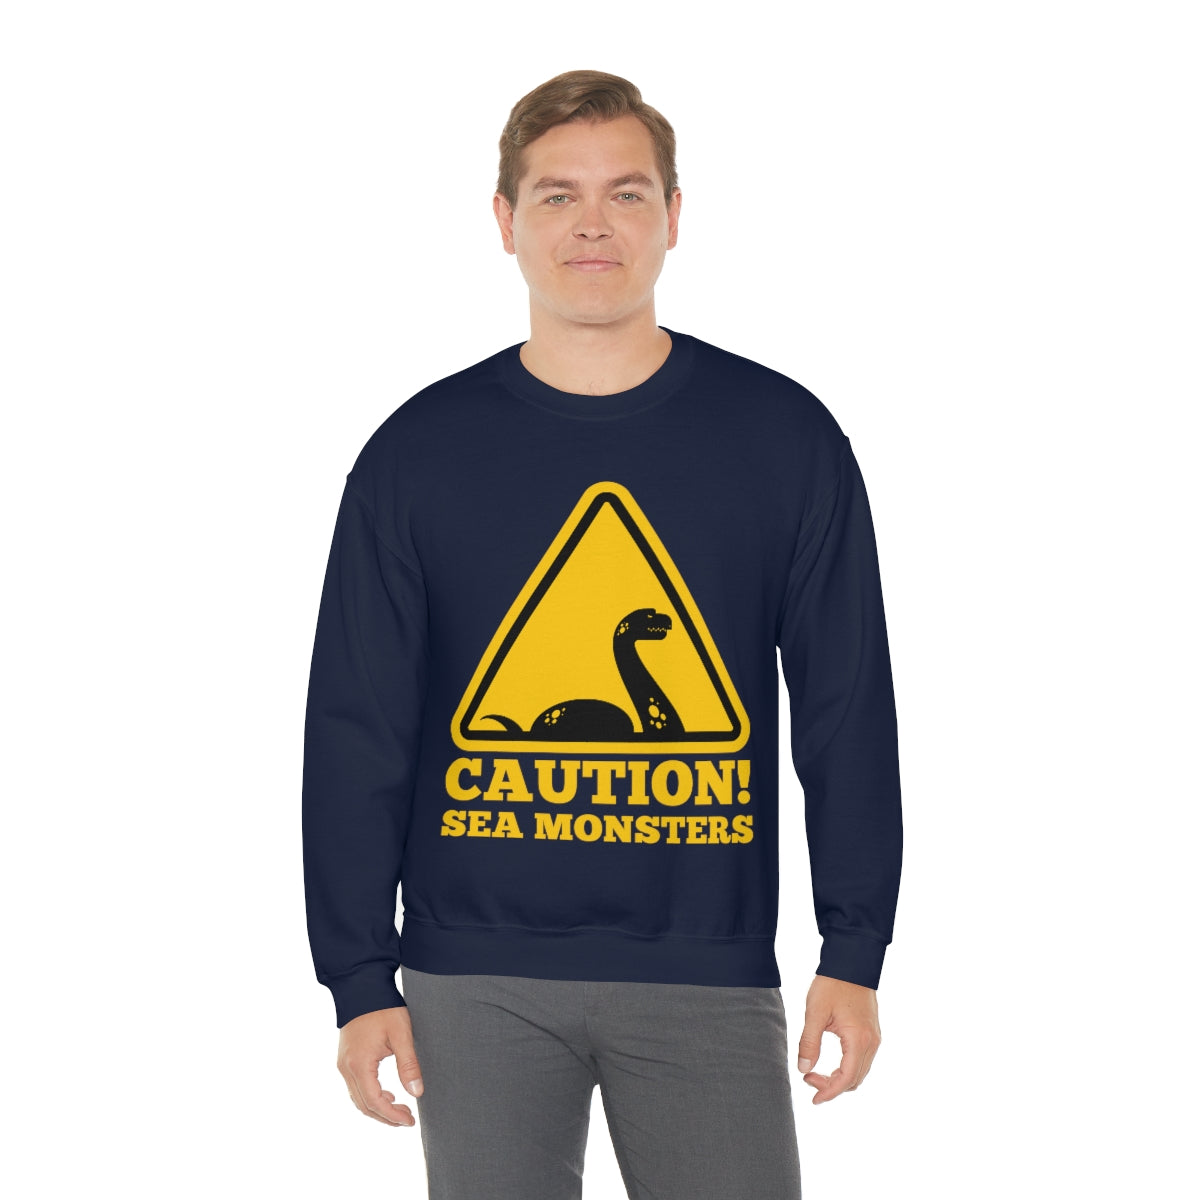 Caution! Sea Monsters Sweatshirt